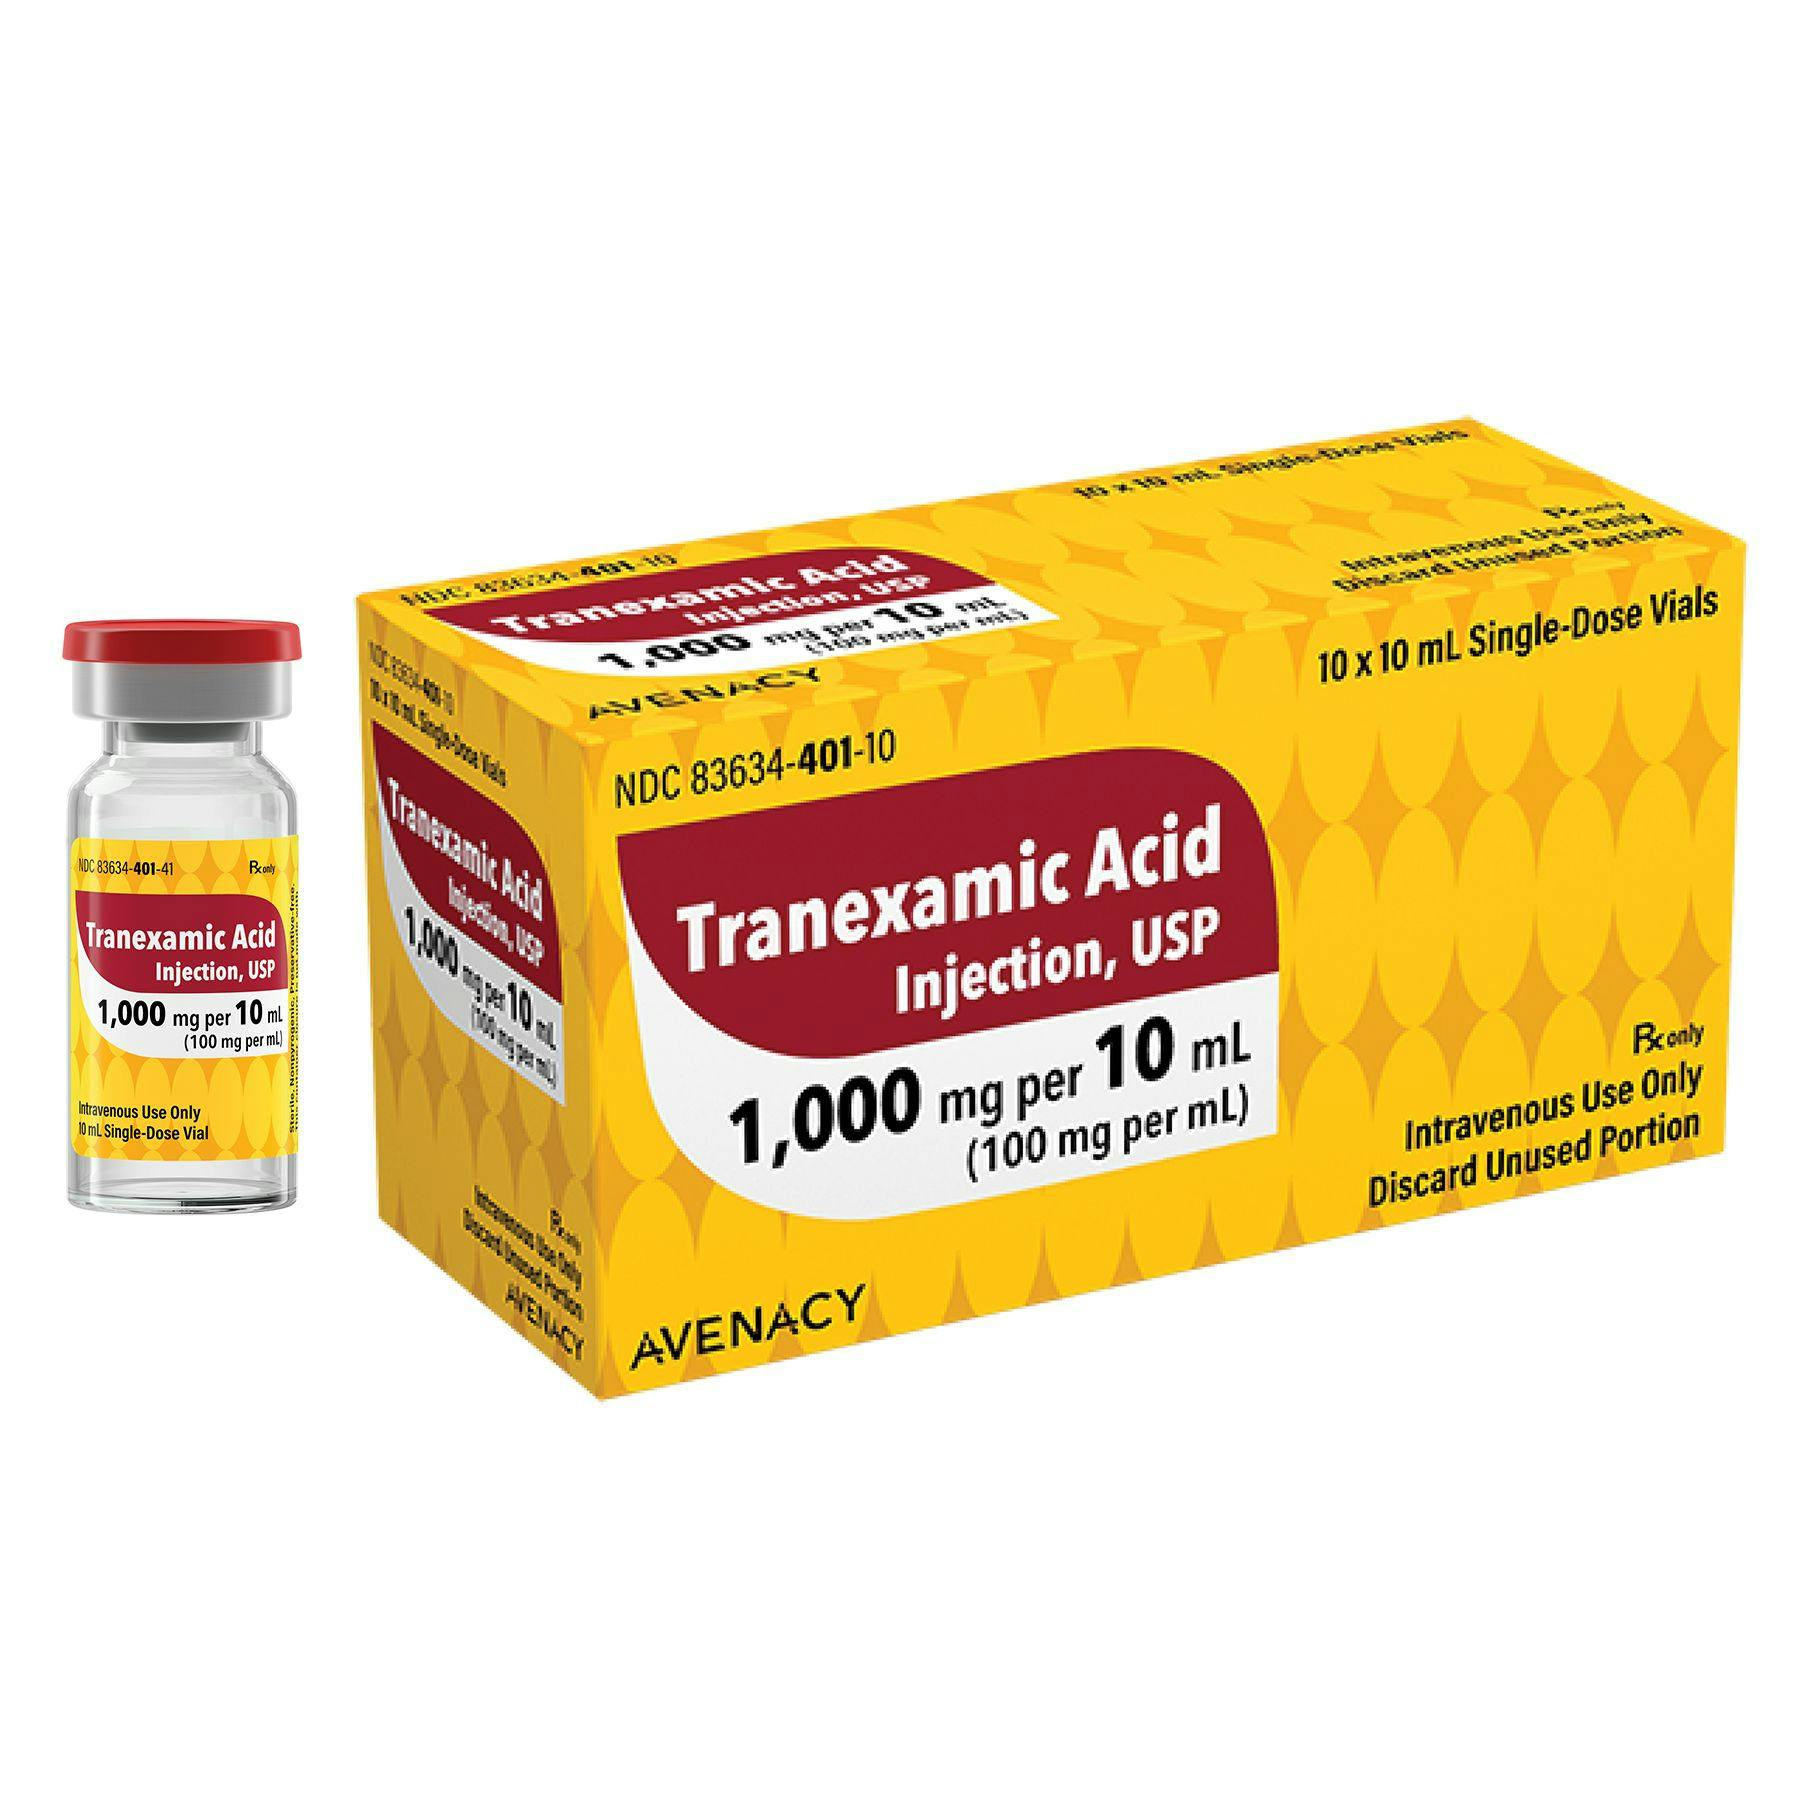 Avenacy Launches Tranexamic Acid Injection, USP to the U.S. | Image Credit: © Avenacy 